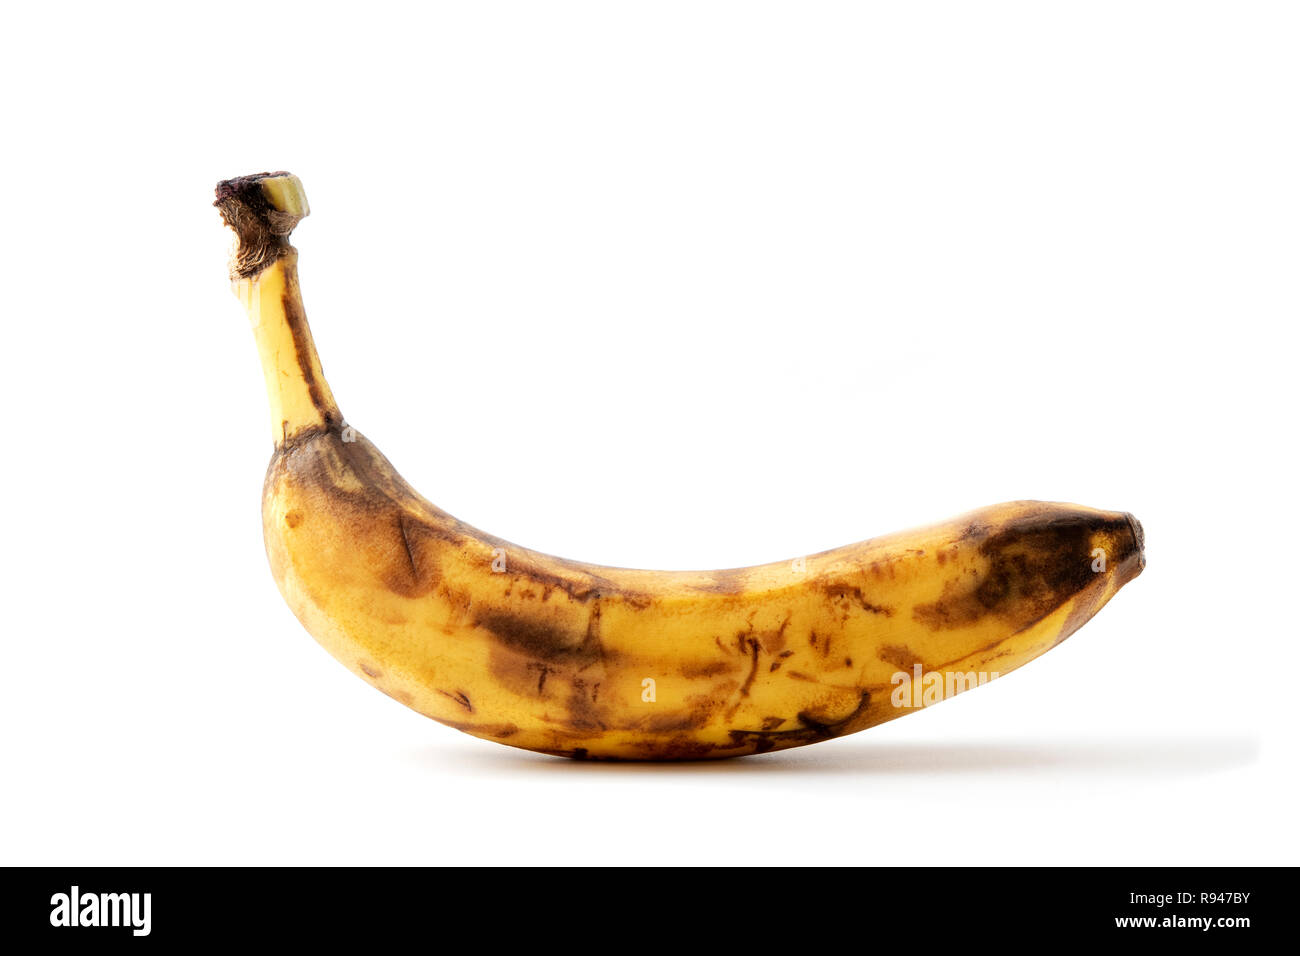 Faule banane -Fotos und -Bildmaterial in hoher Auflösung – Alamy